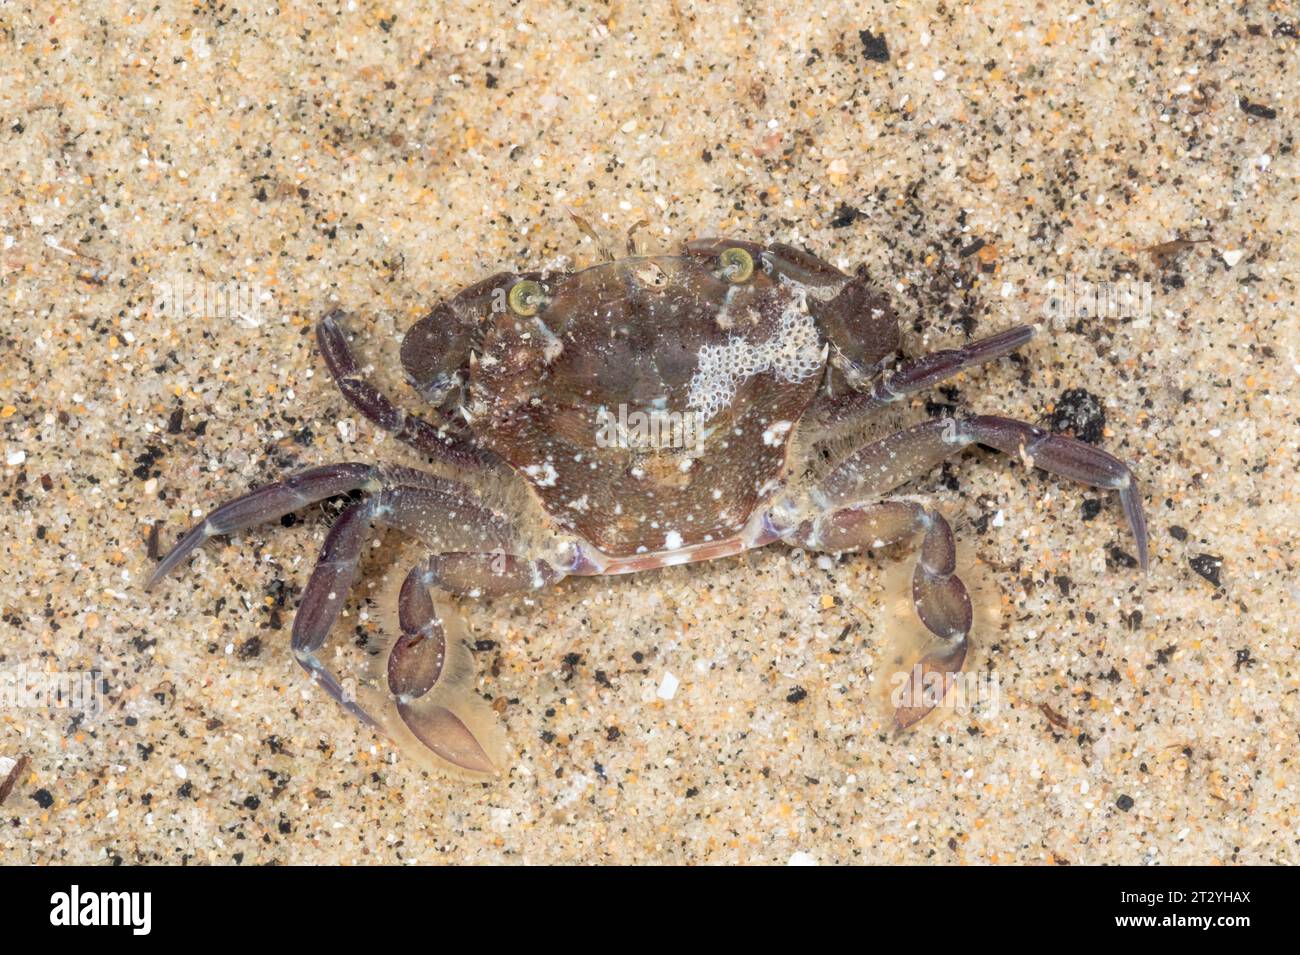 Arch-fronted Swimming Crab (Liocarcinus navigator formerly arcuatus), Polybiidae, Decapoda, Crustacean. Sussex, UK Stock Photo